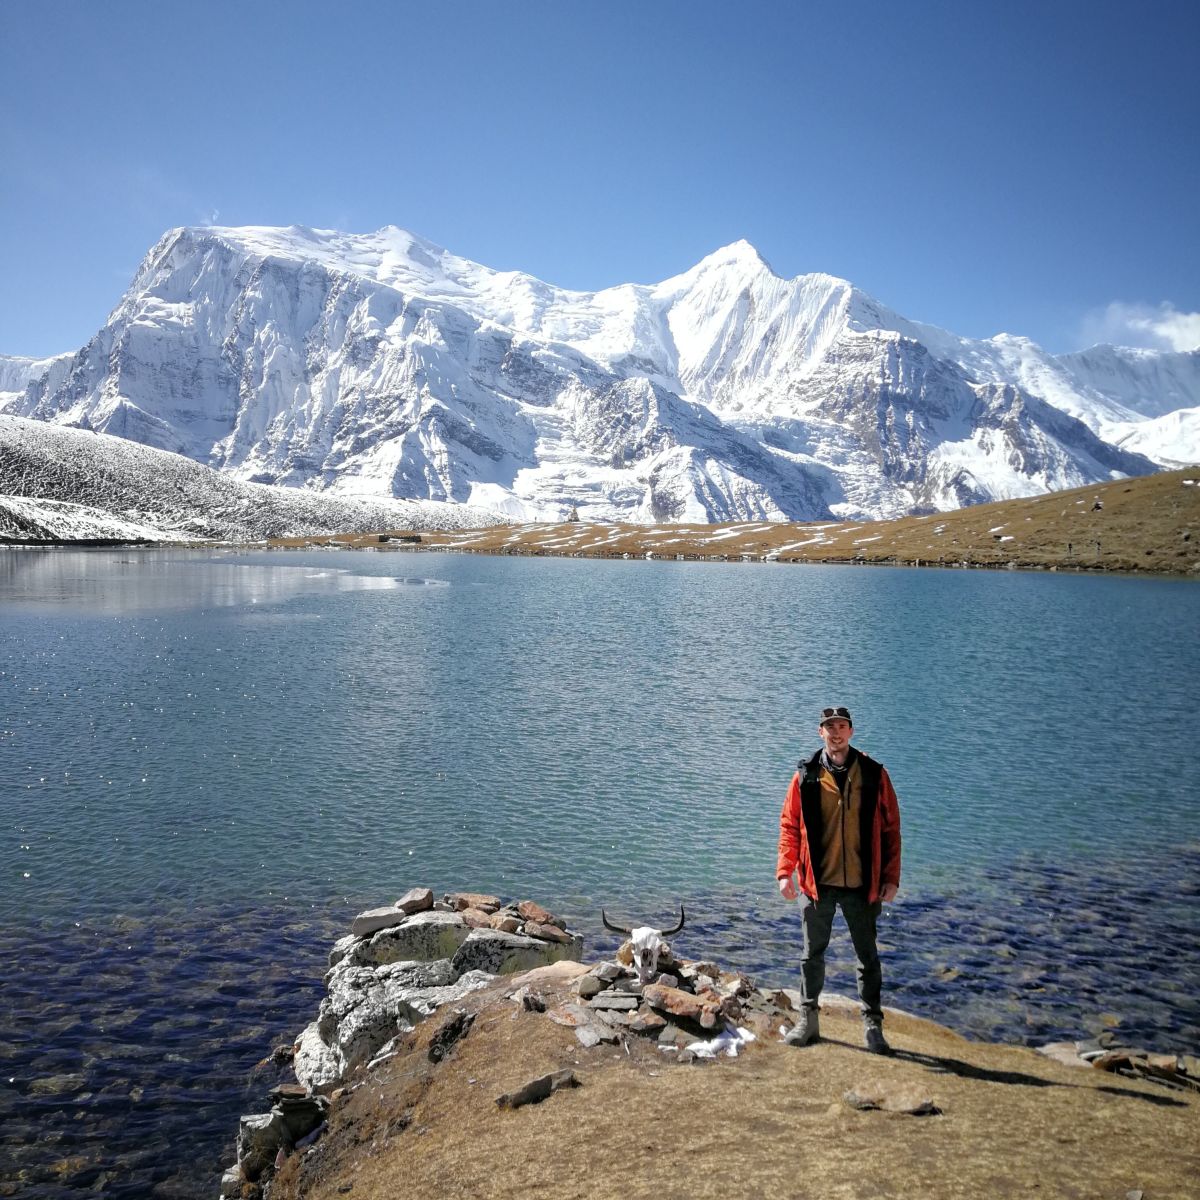 Nepal mountain scene and hiker